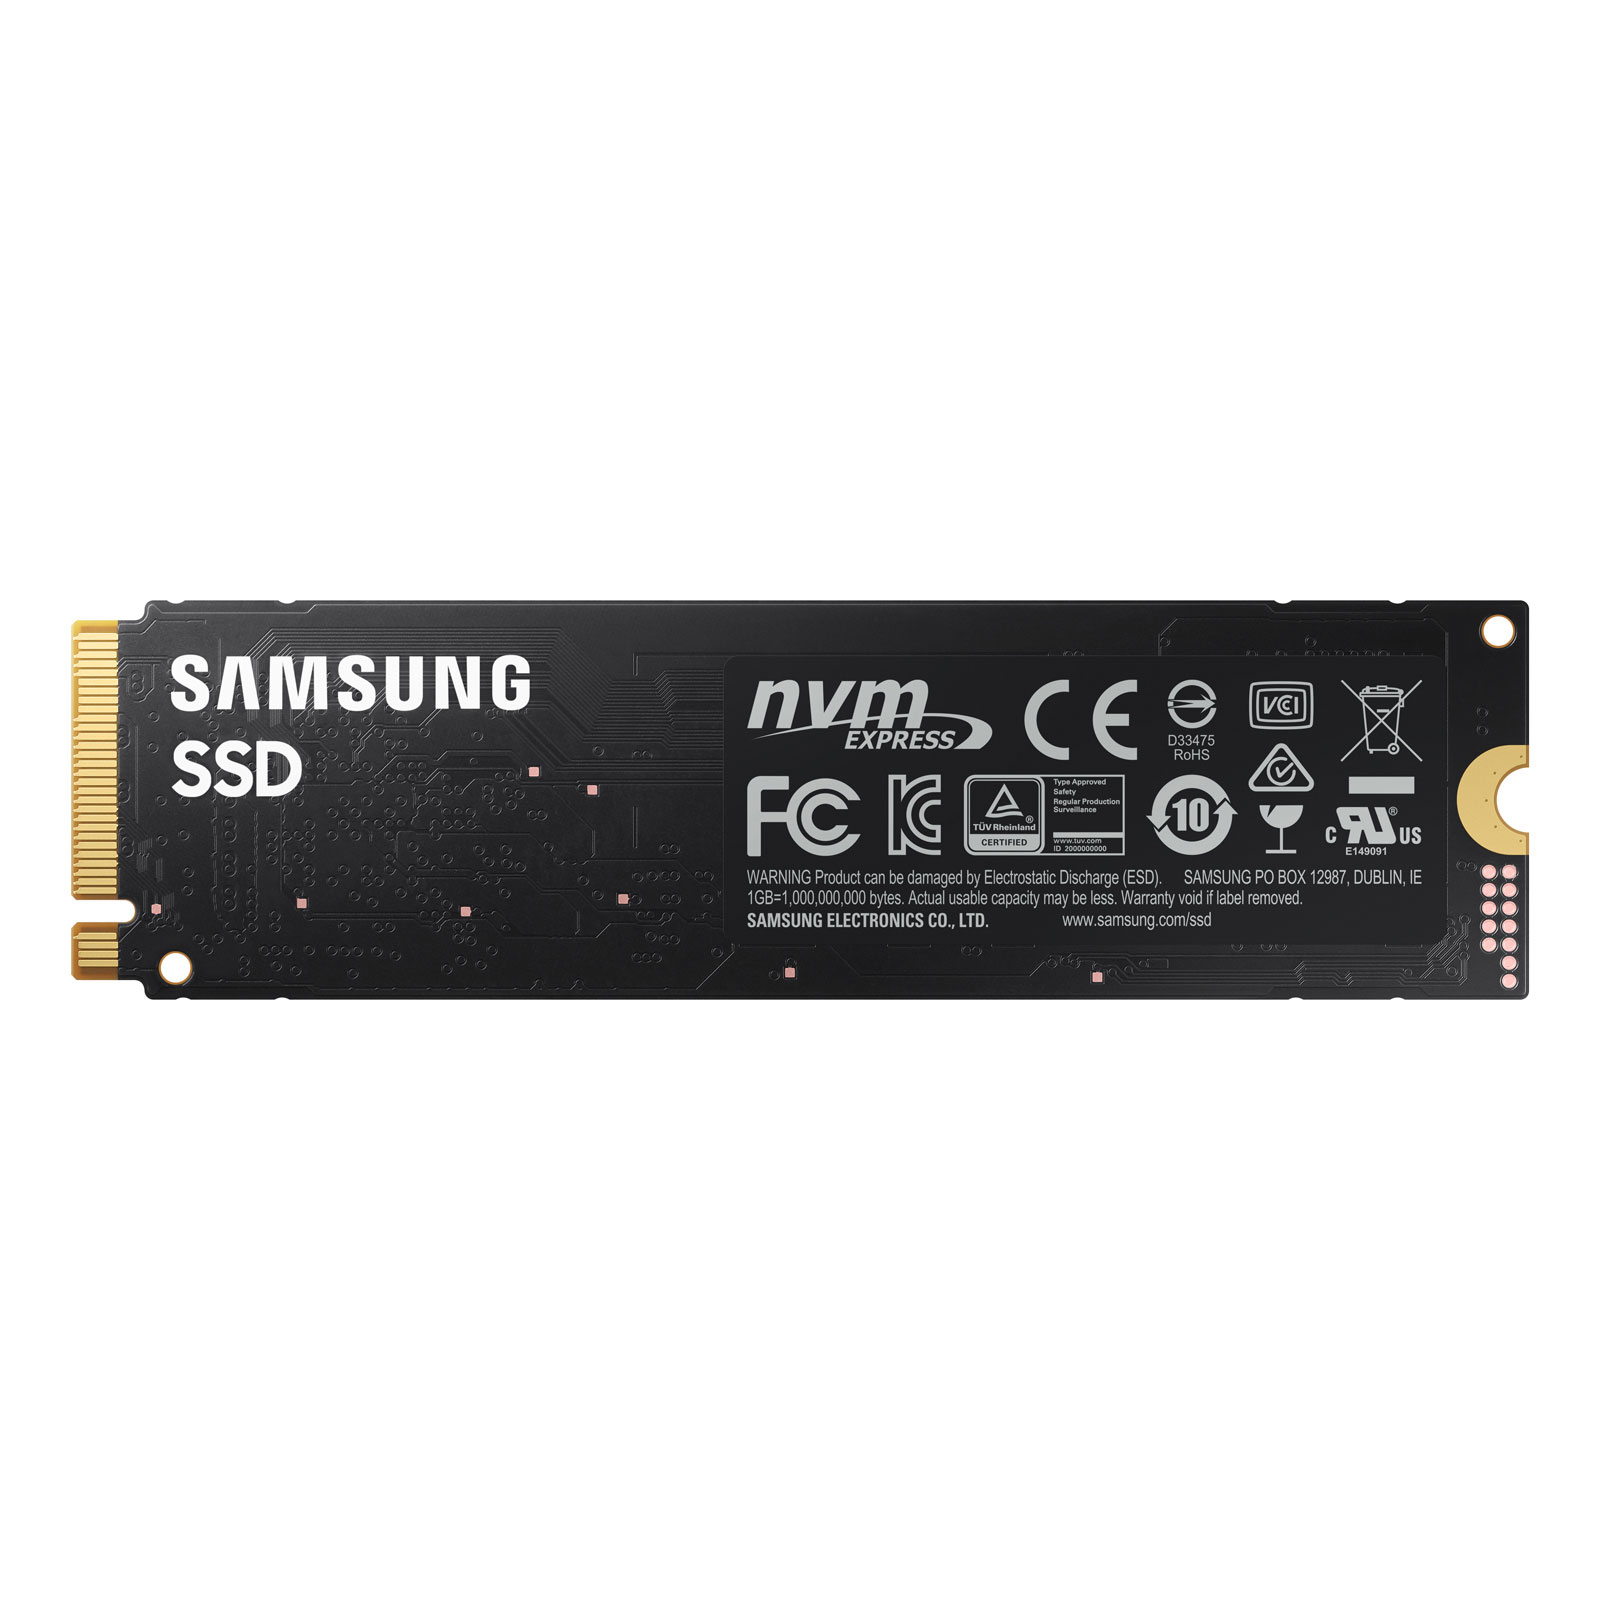 3500MBs最大書き込み速度【新品未開封品】SSD SAMSUNG 980 MZ-V8V1T0B/IT